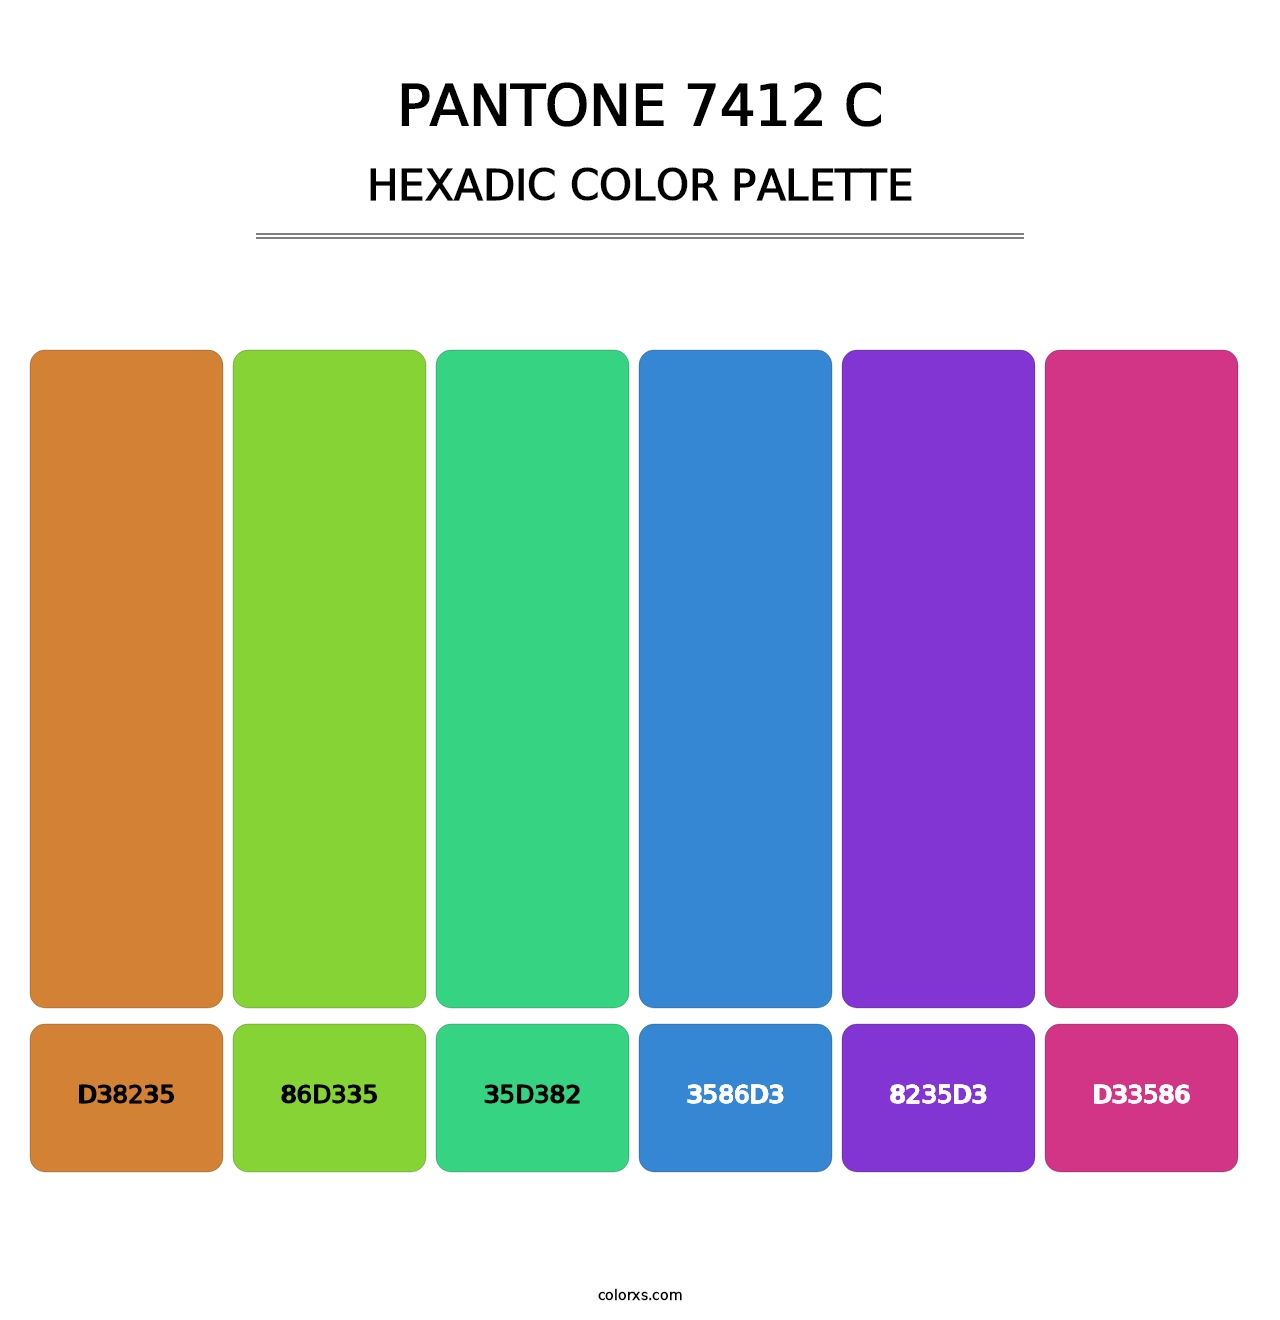 PANTONE 7412 C - Hexadic Color Palette